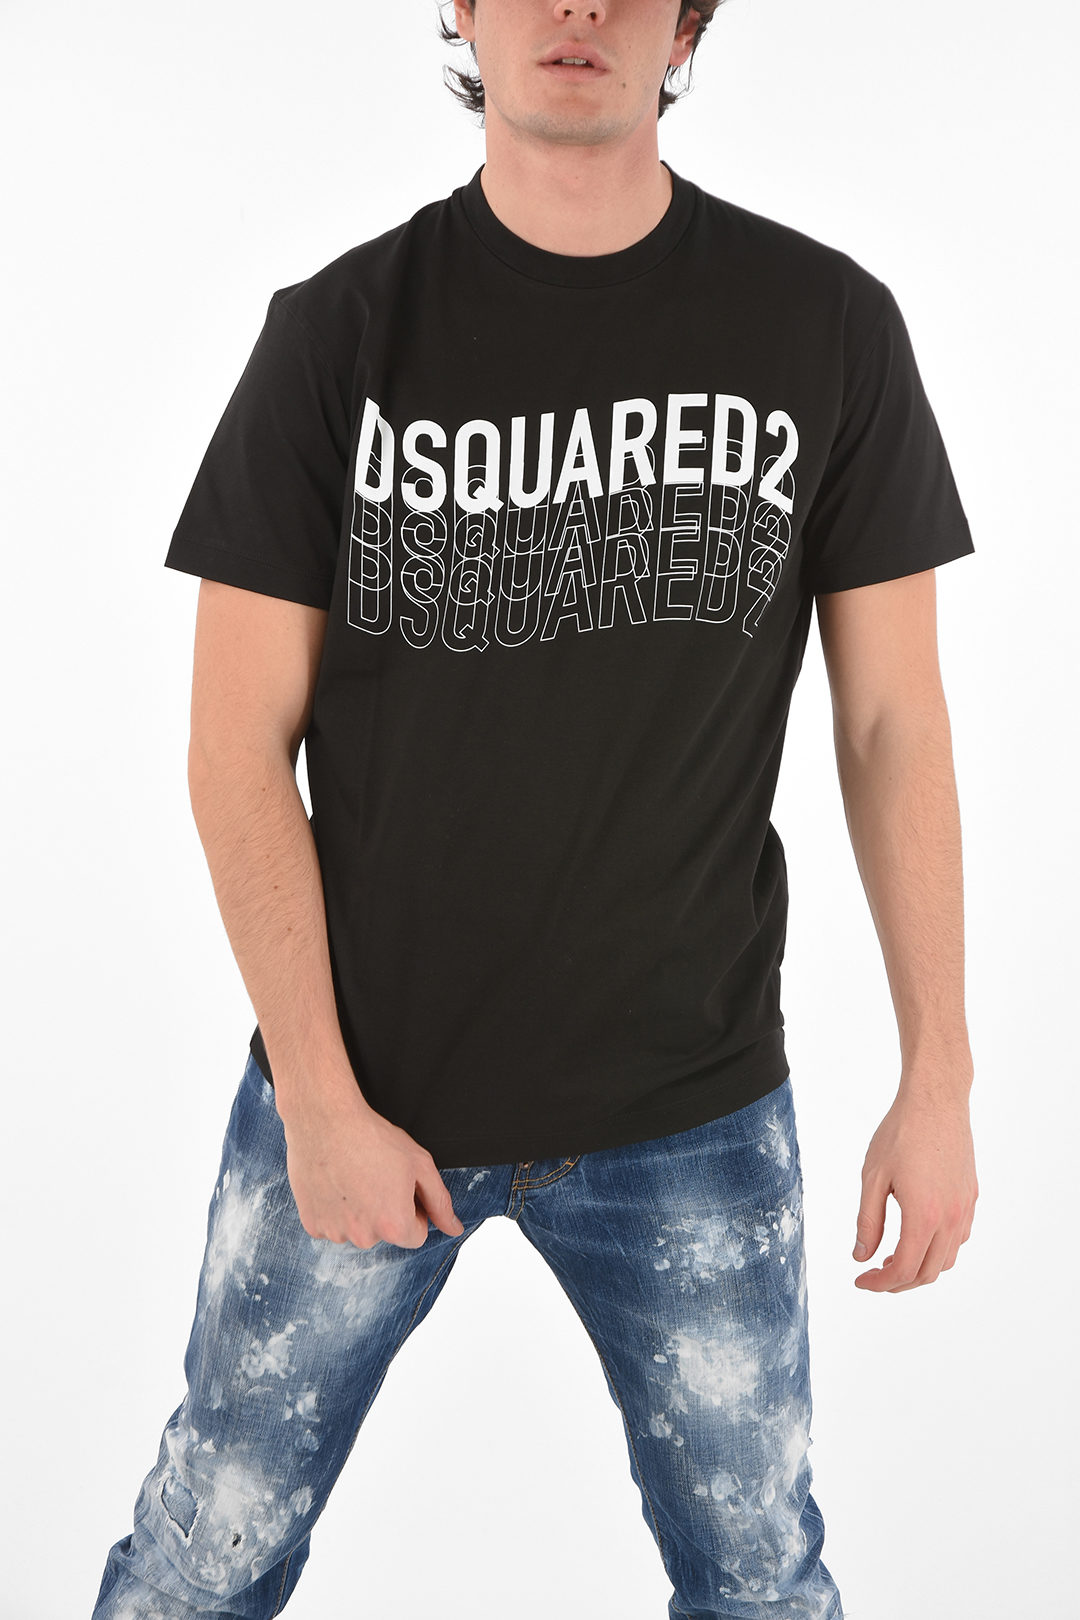 DSQUARED2  T-Shirt Short Sleeves Slim Fit Printed Logo All Sizes S M L XL XXL 